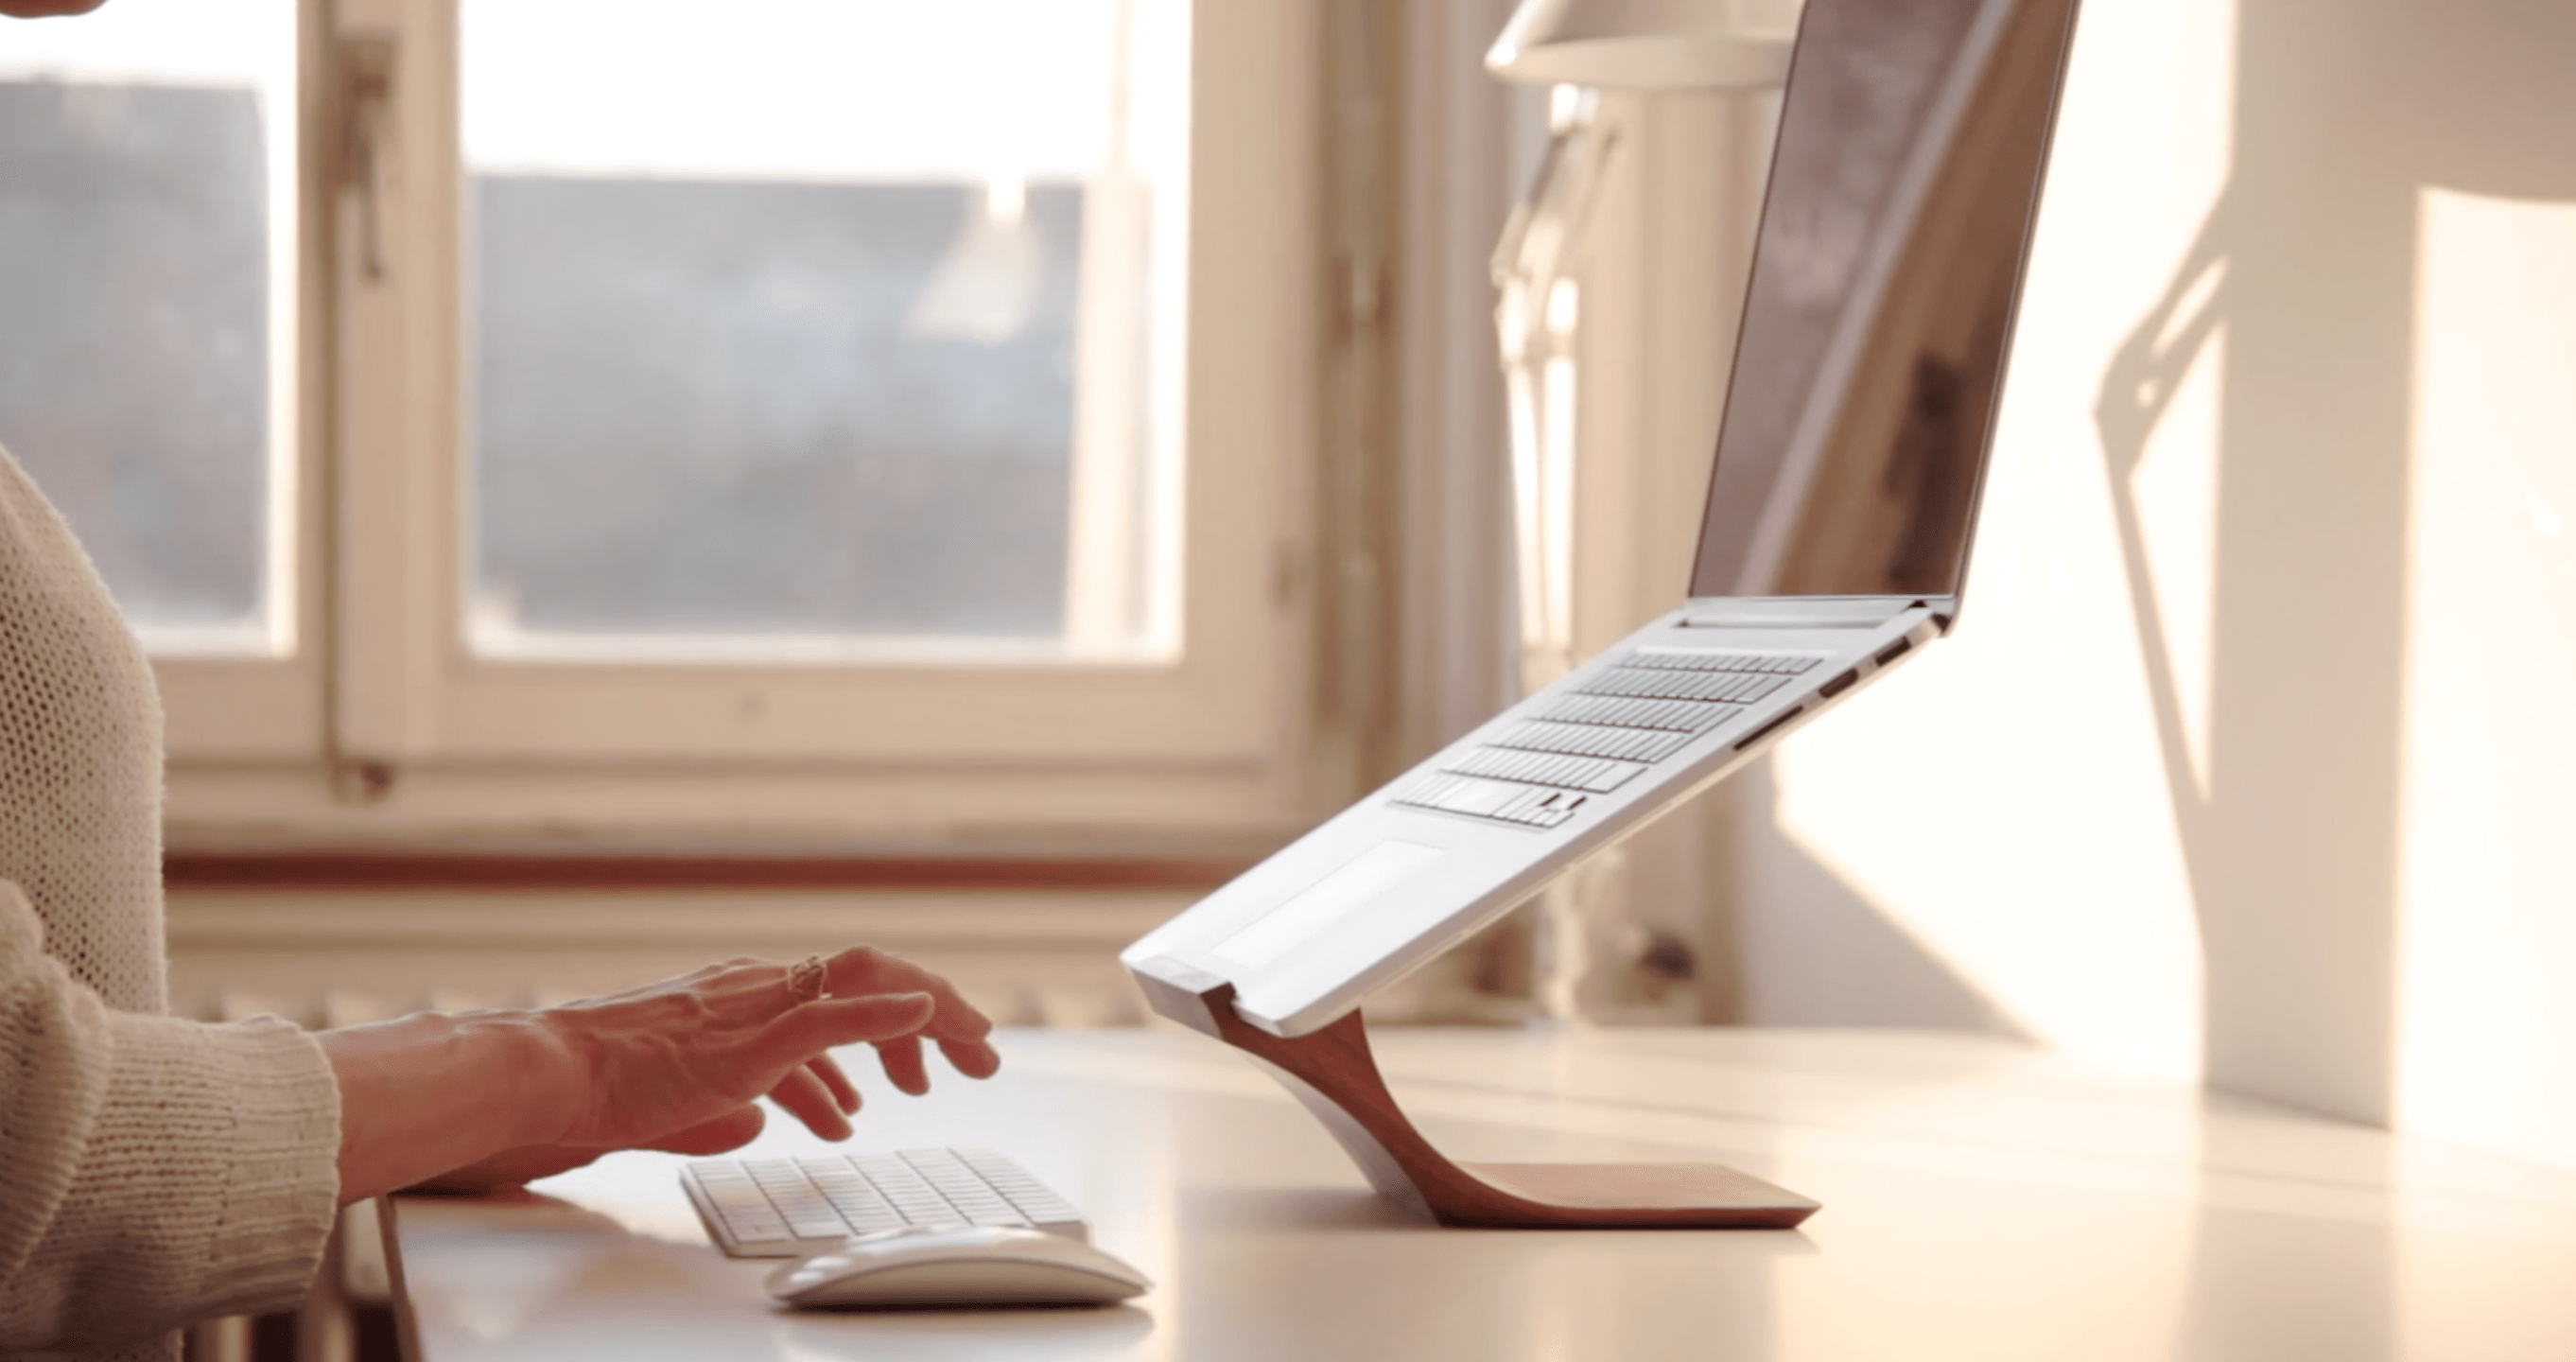 Yohann-MacBook-stand-desk